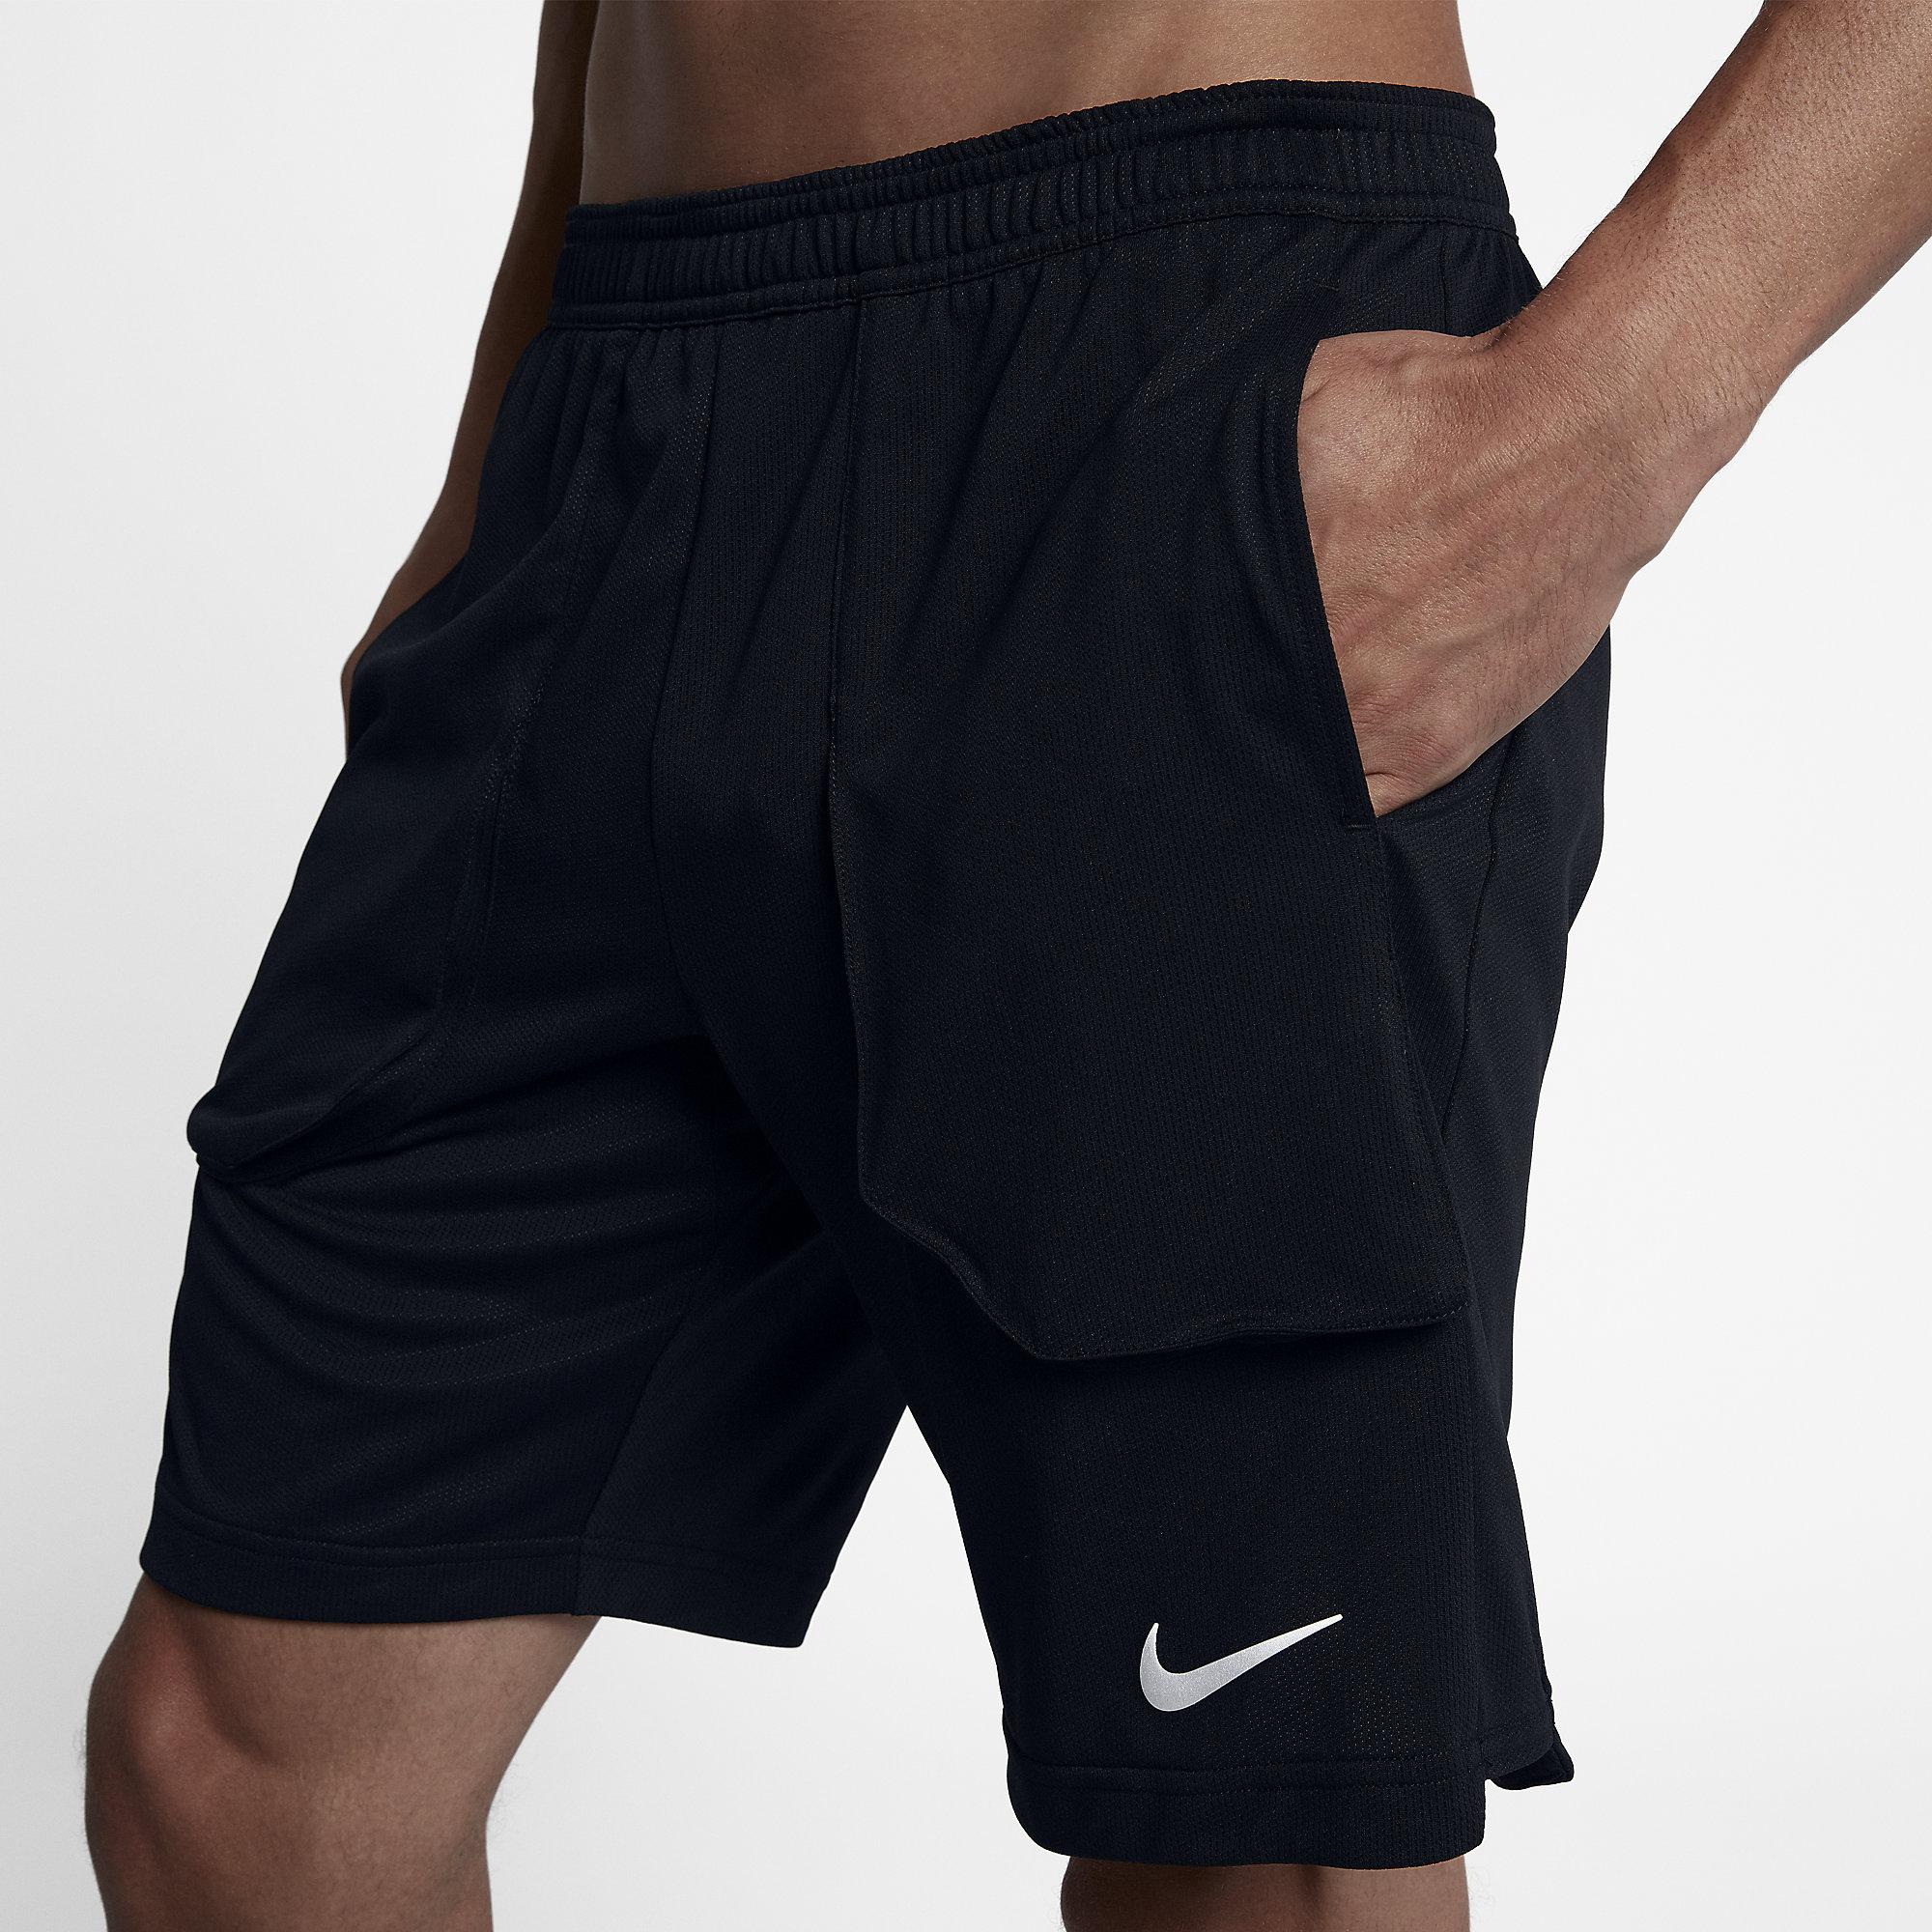 Nike Mens Breathe Tennis Shorts - Black/White - Tennisnuts.com